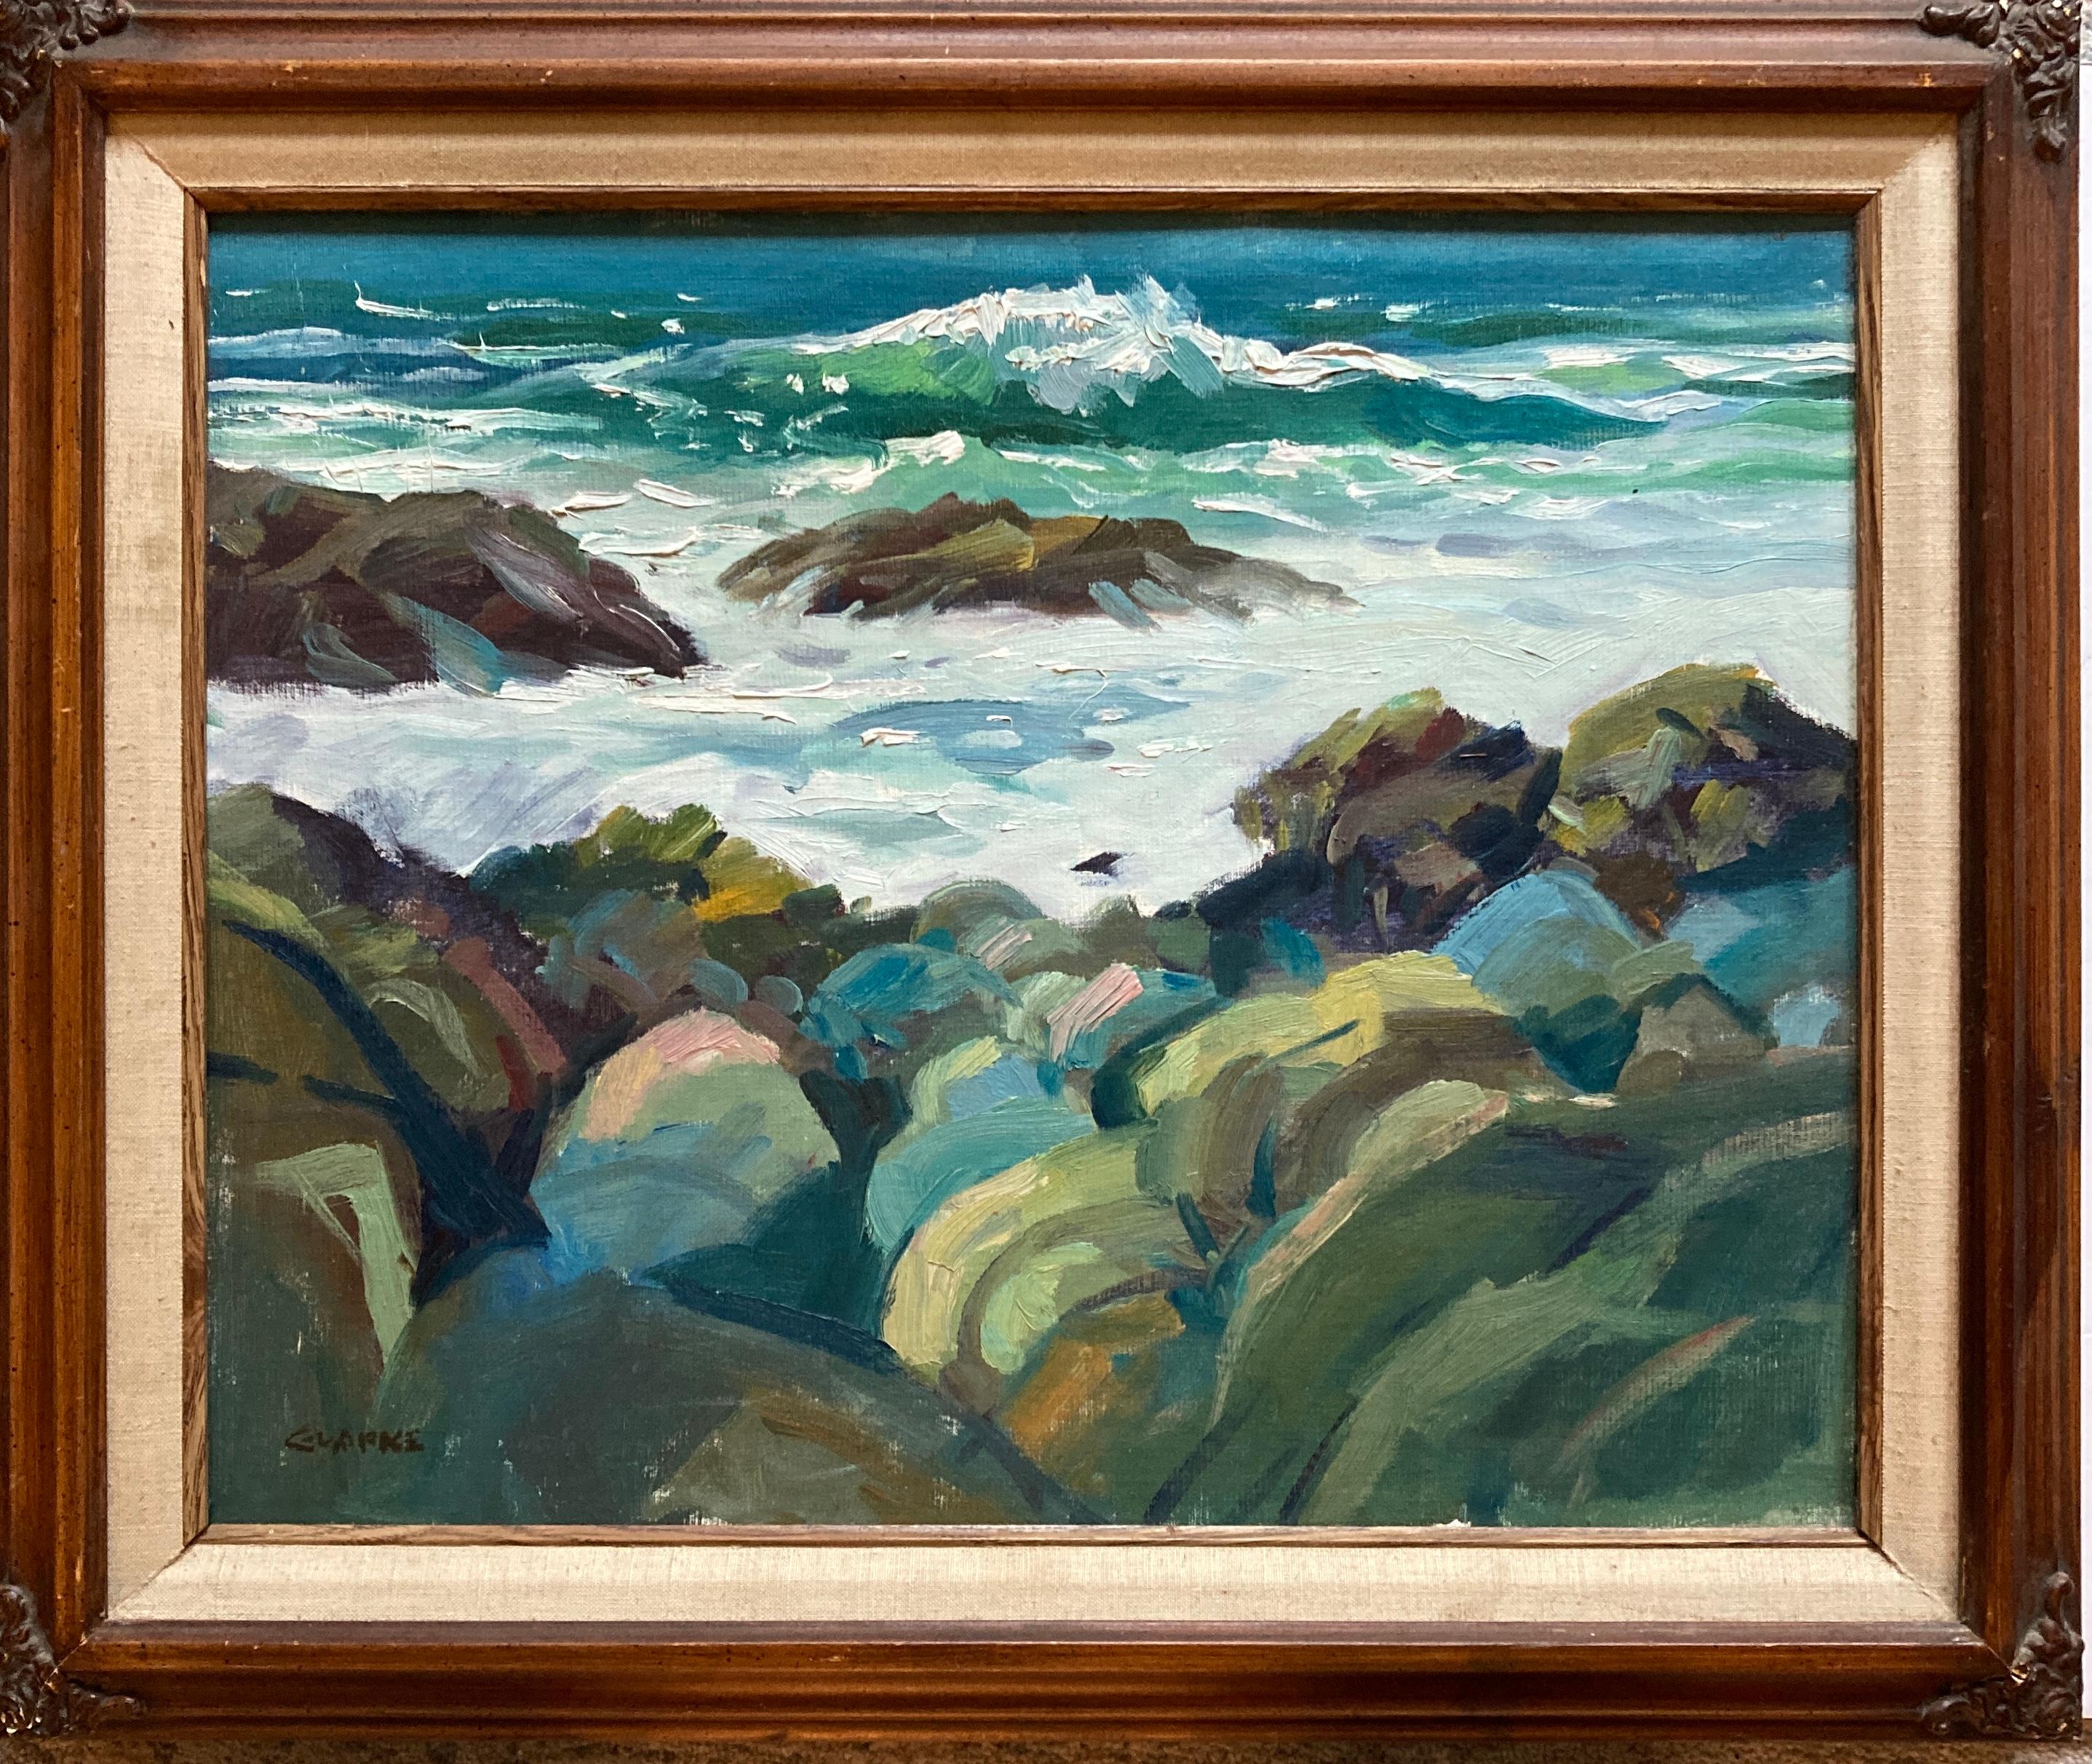 Edward Glafke 'Point Lobos' Carmel Impressionist Seascape Painting For Sale 1